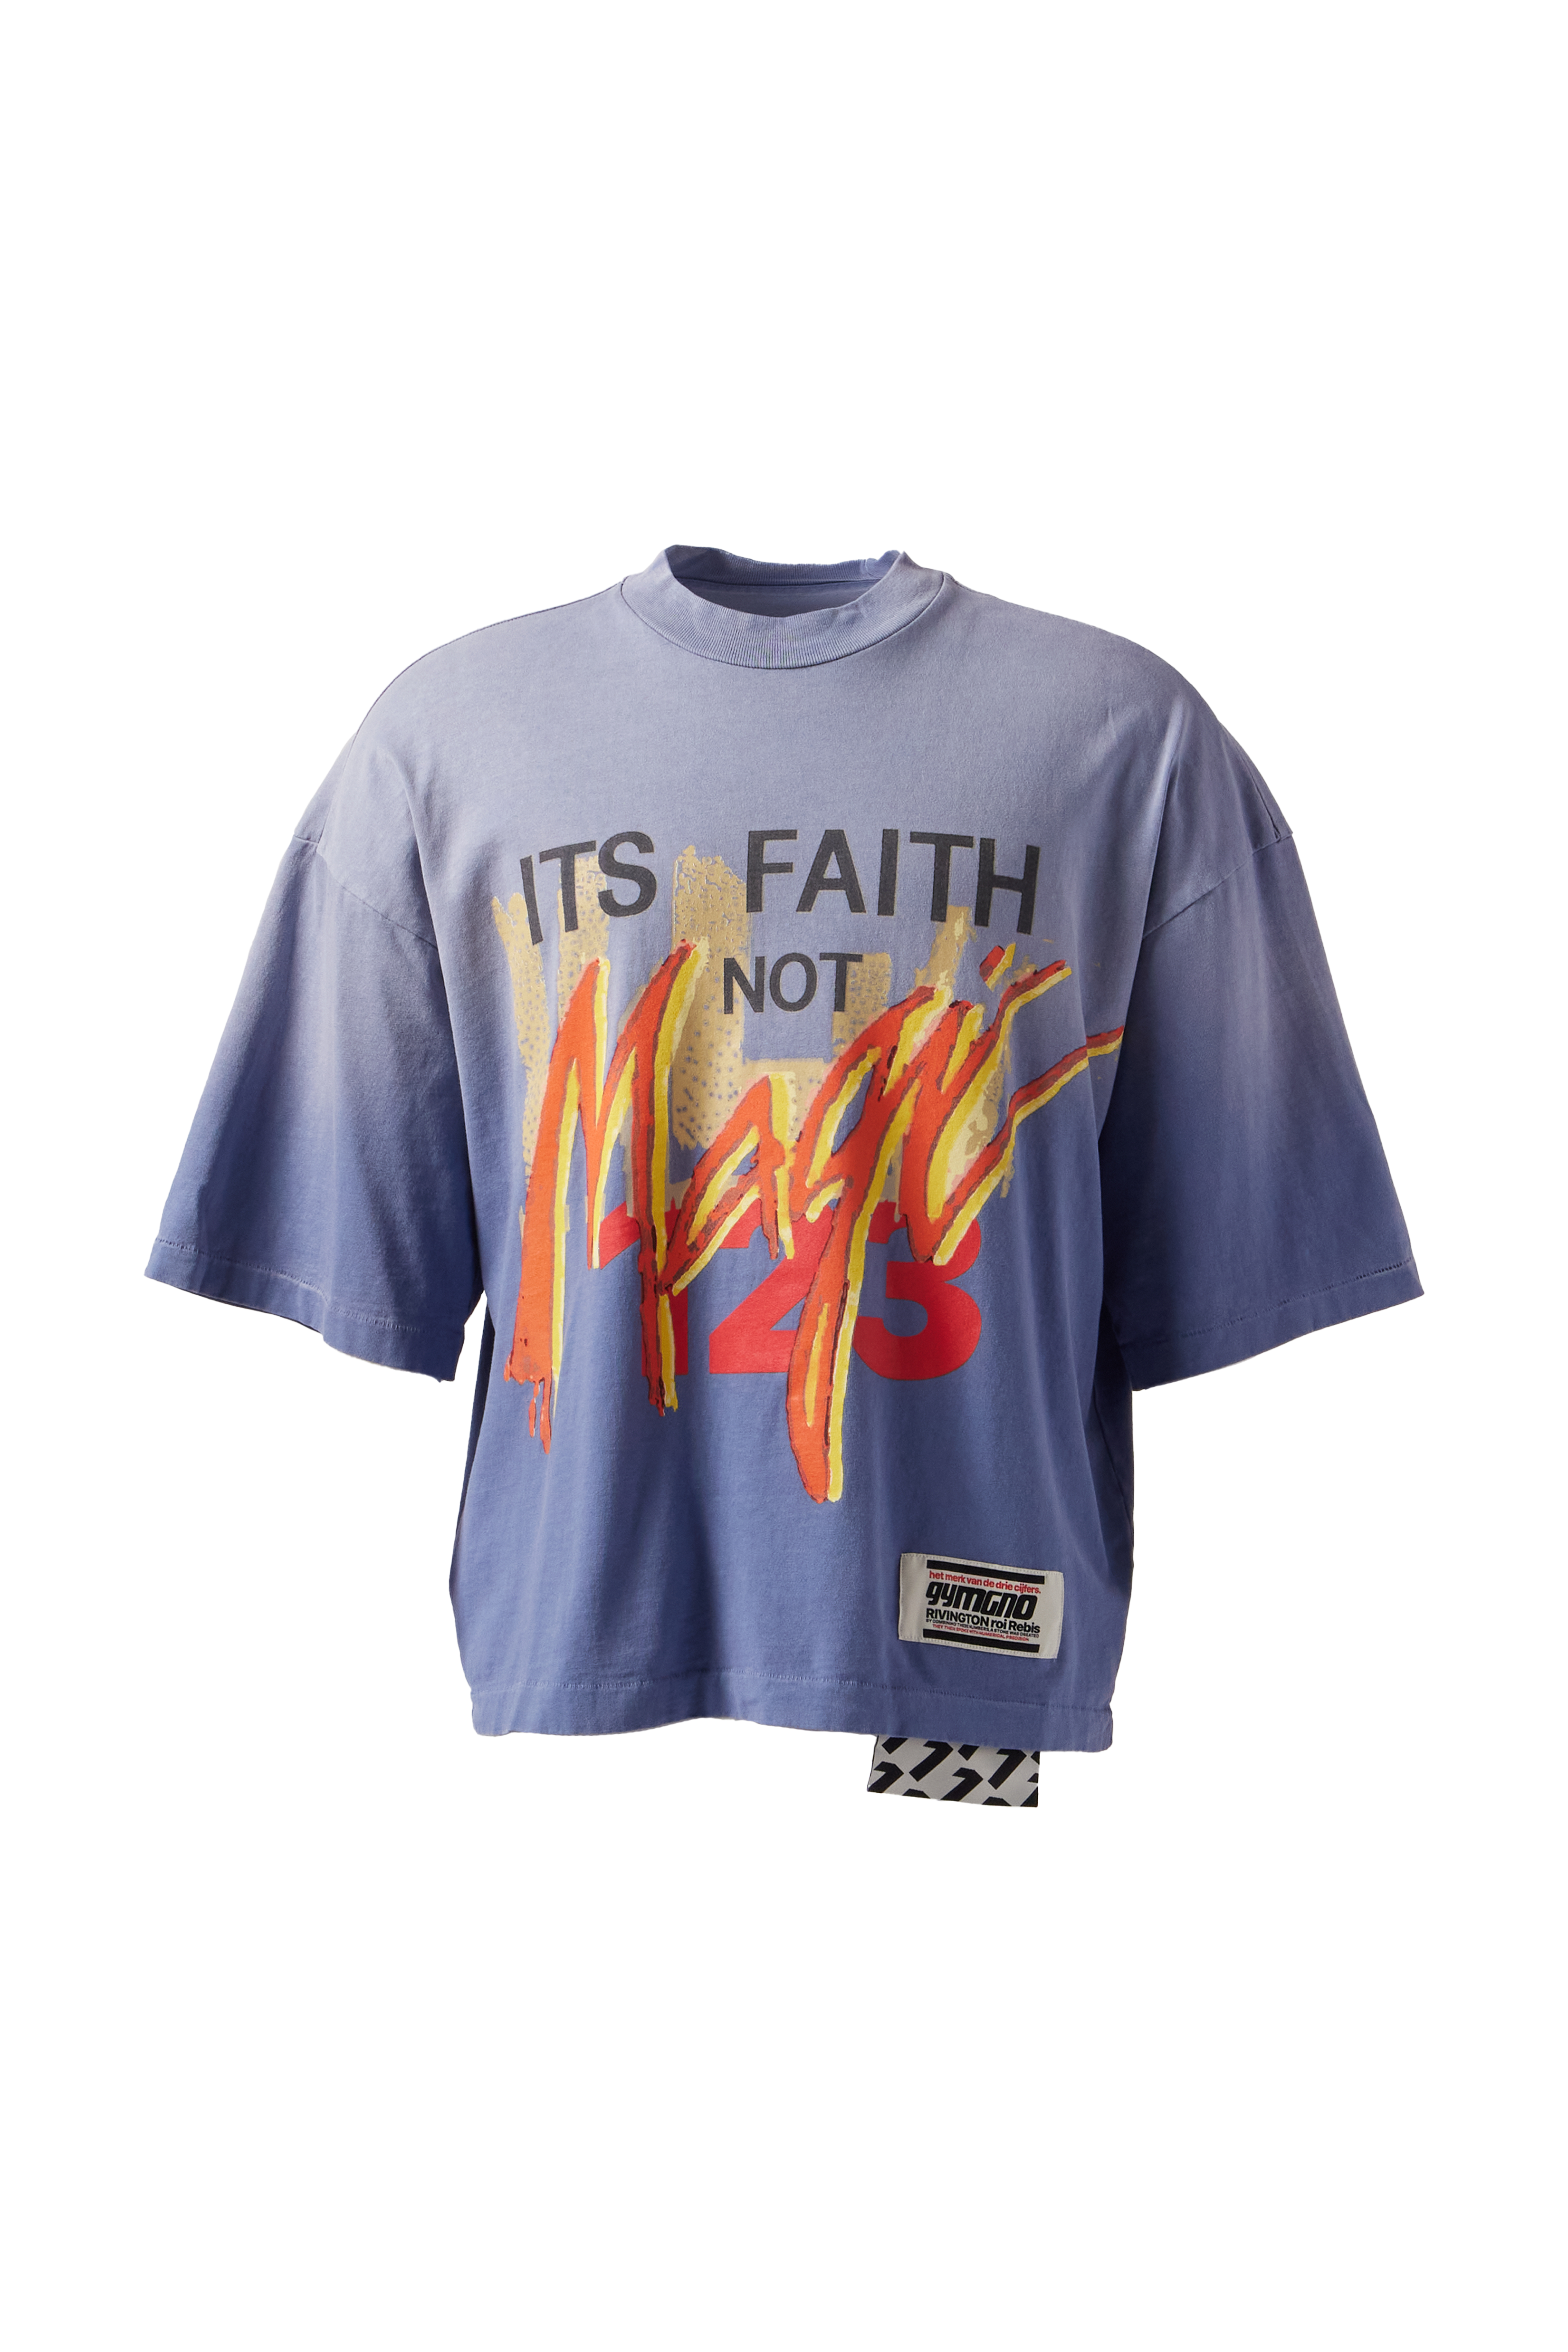 RRR123 - It's Faith Not Magic Tee product image